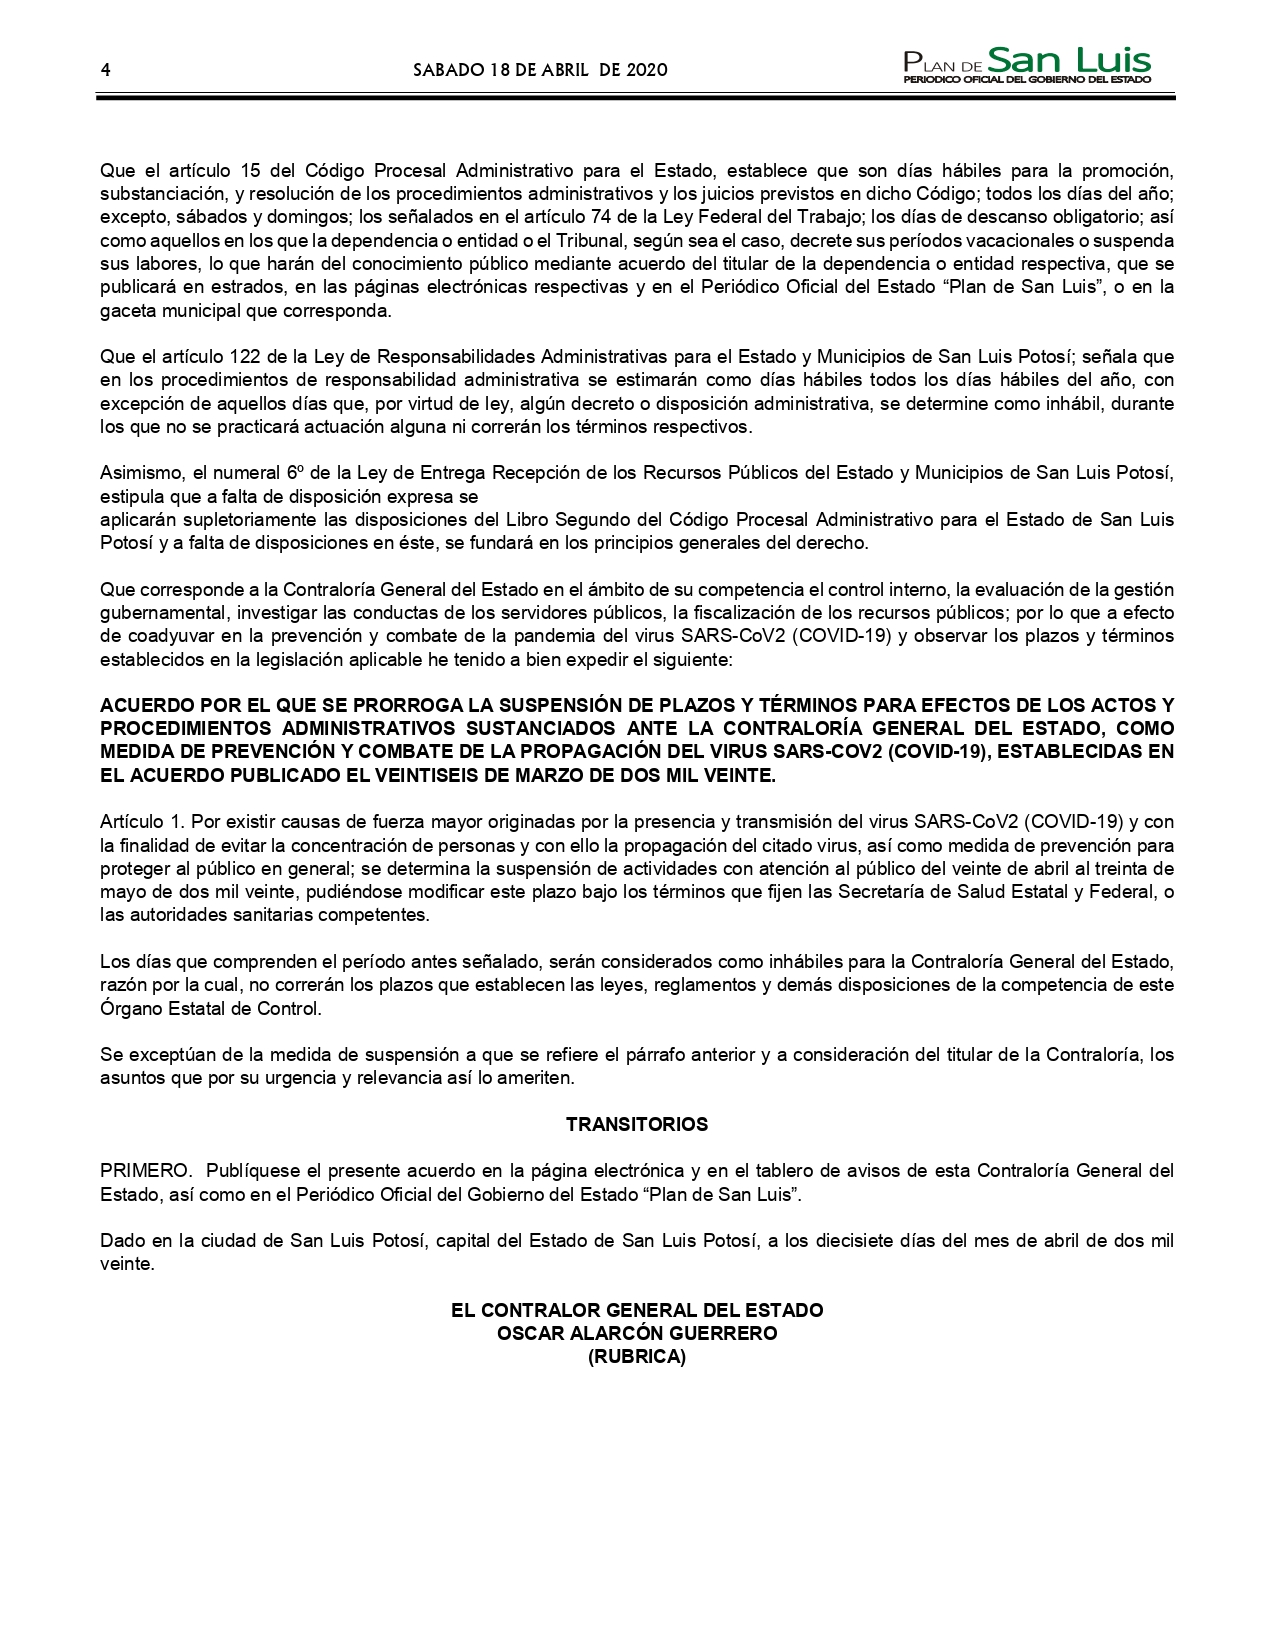 SLP ACUERDO DE PROROGA SUSPENSION DEBIDO AL COVID 19 CONTRALORIA GRAL. DEL EDO (18-ABR-2020).pdf (1)_pages-to-jpg-0004.jpg